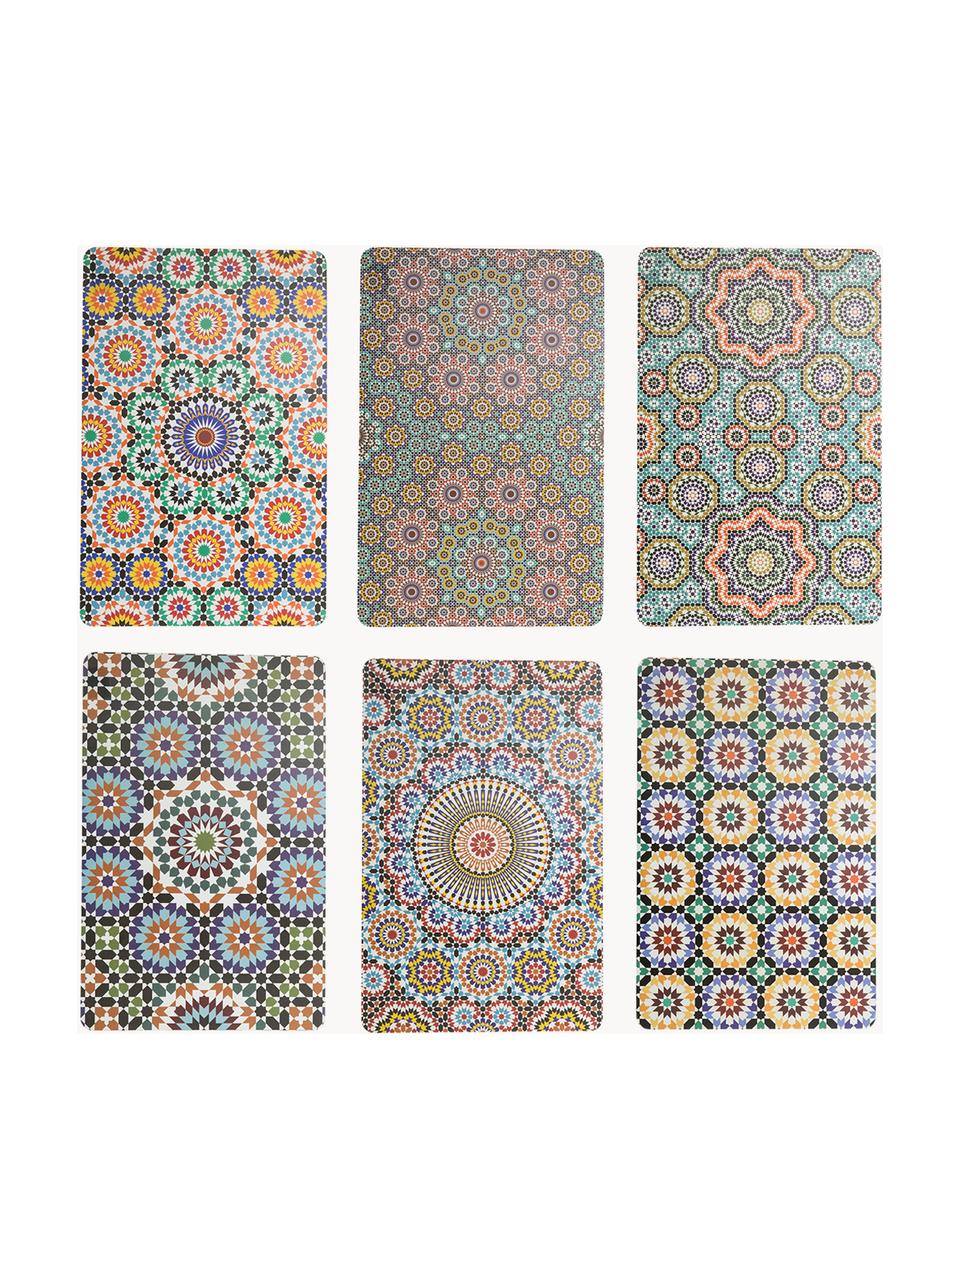 Set de manteles individuales doble cara de plástico Marrakesch, 6 pzas., Plástico, Multicolor, An 30 x L 45 cm